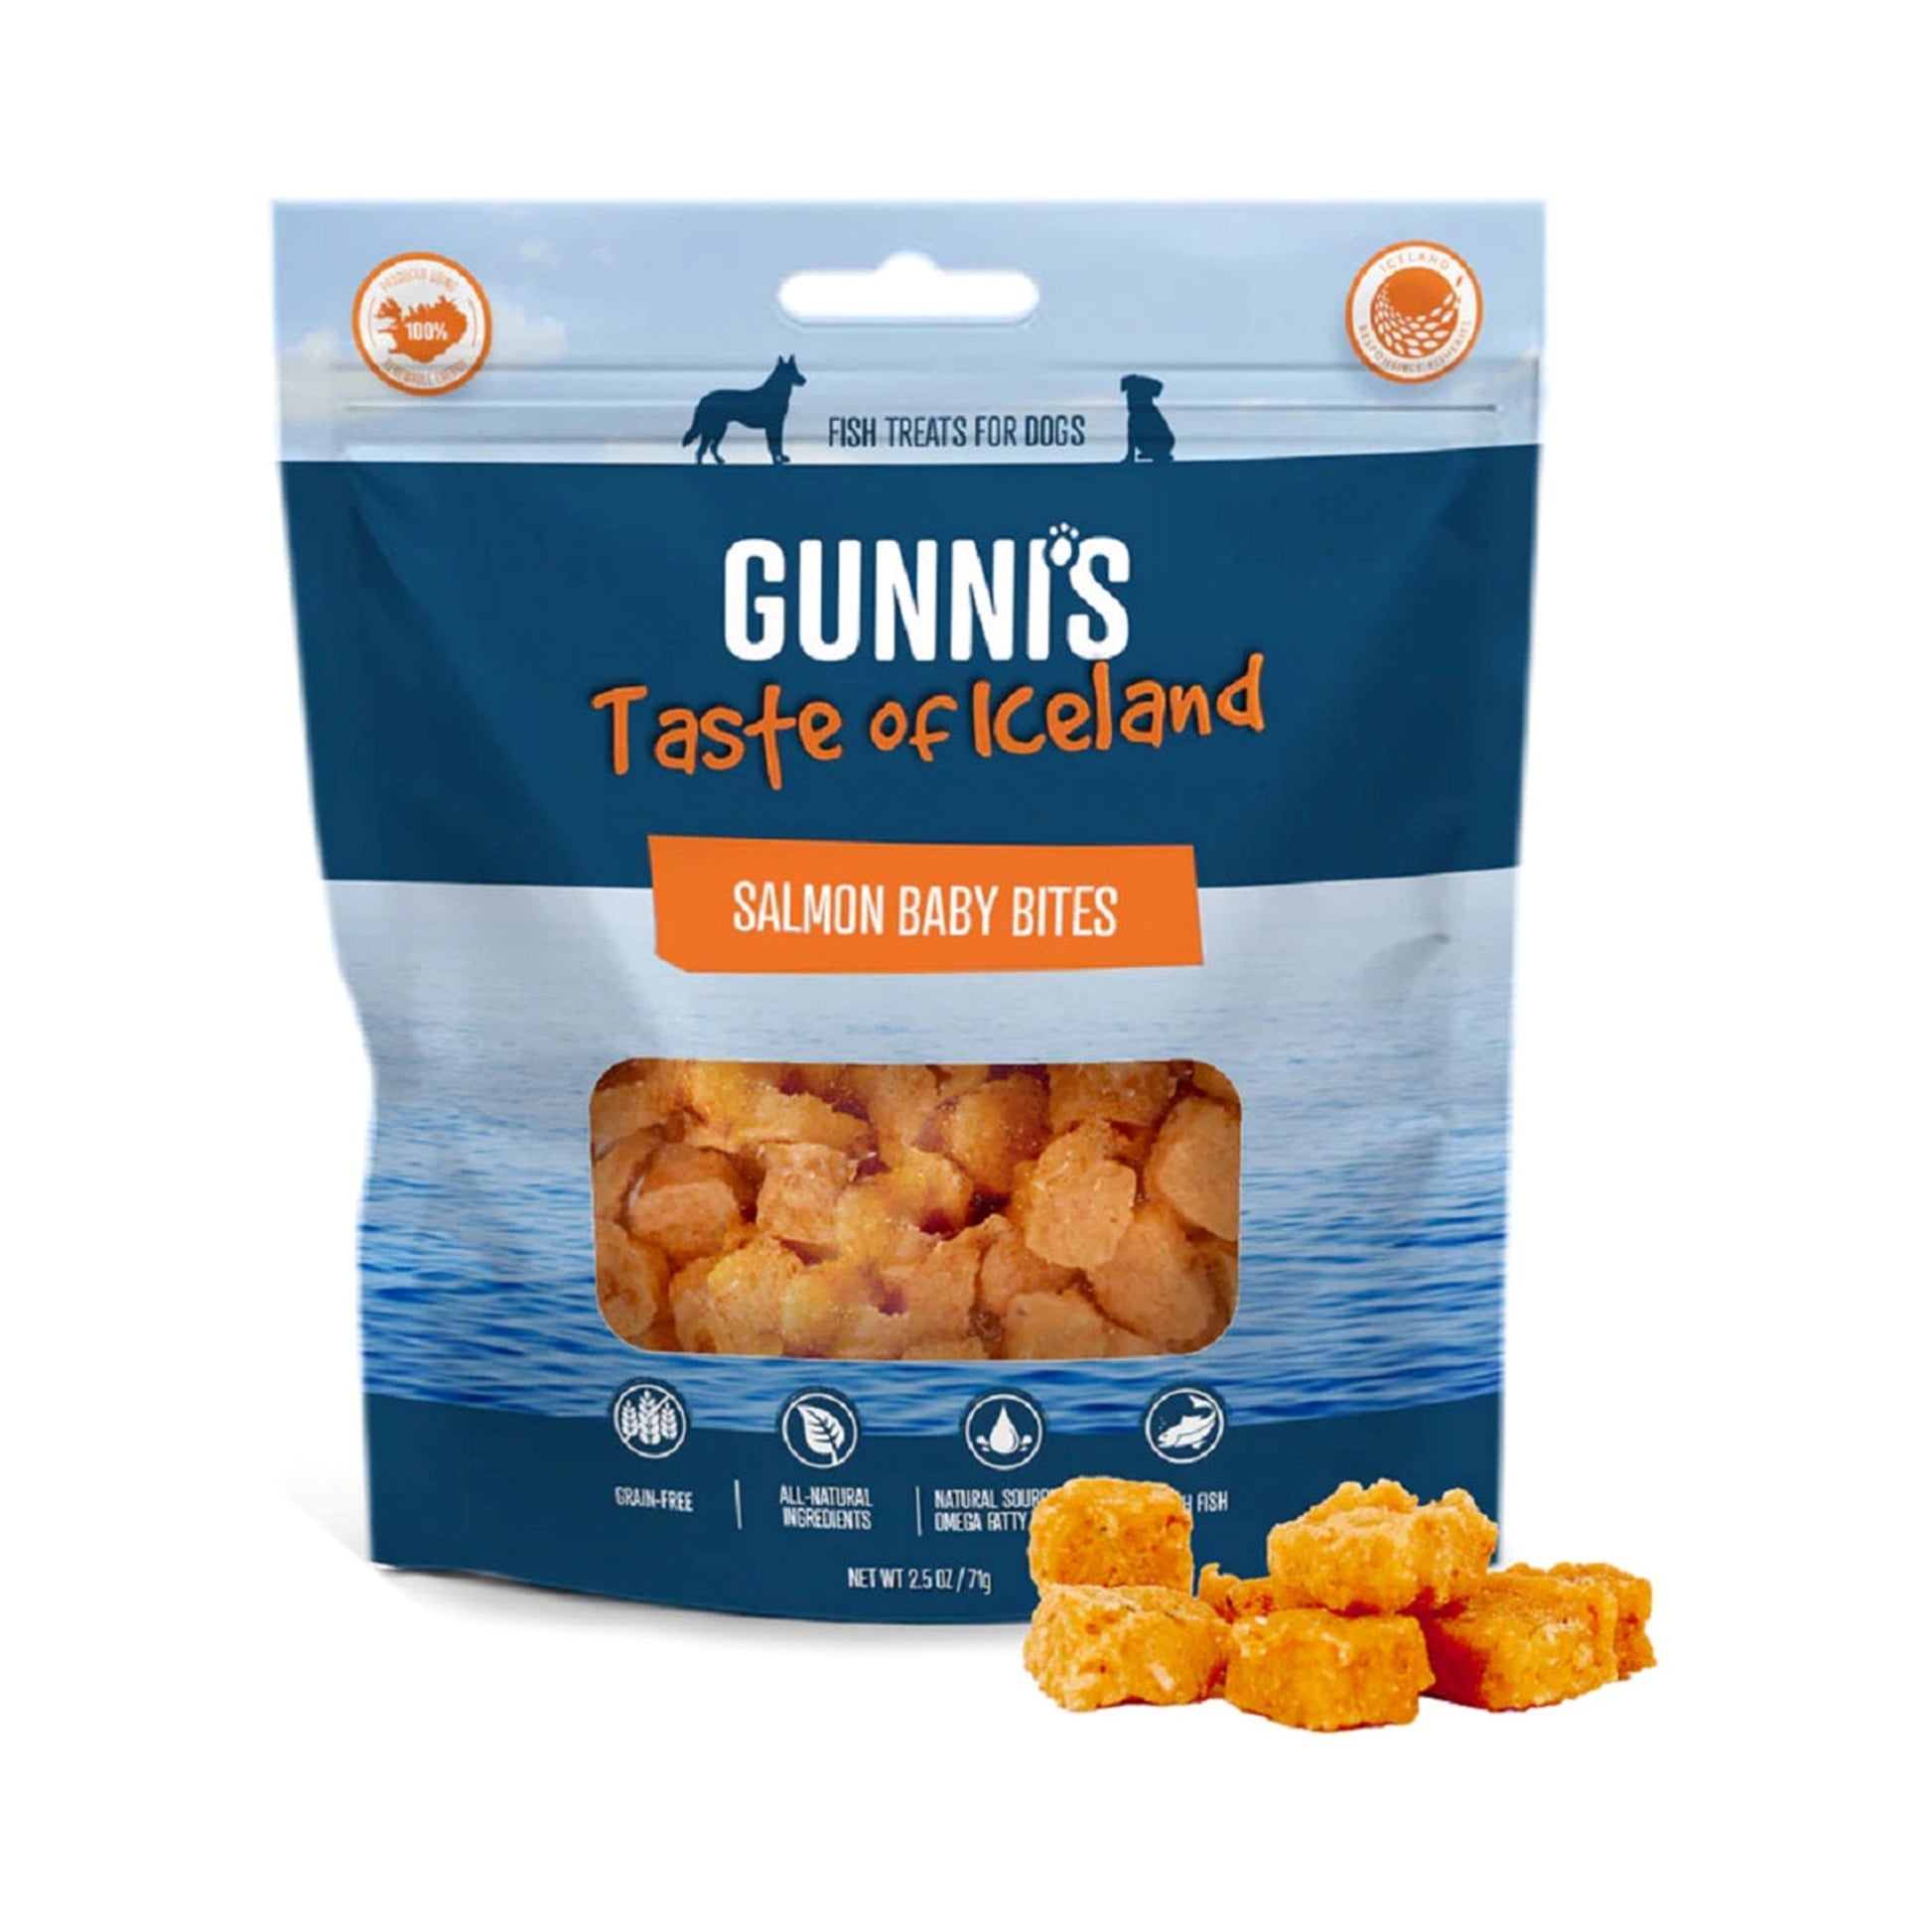 Gunnis Icelandic Salmon Natural Dog Treats - Grain-Free, Omega-3 Rich, Hypoallergenic Dog Training Treats, 85g Pack